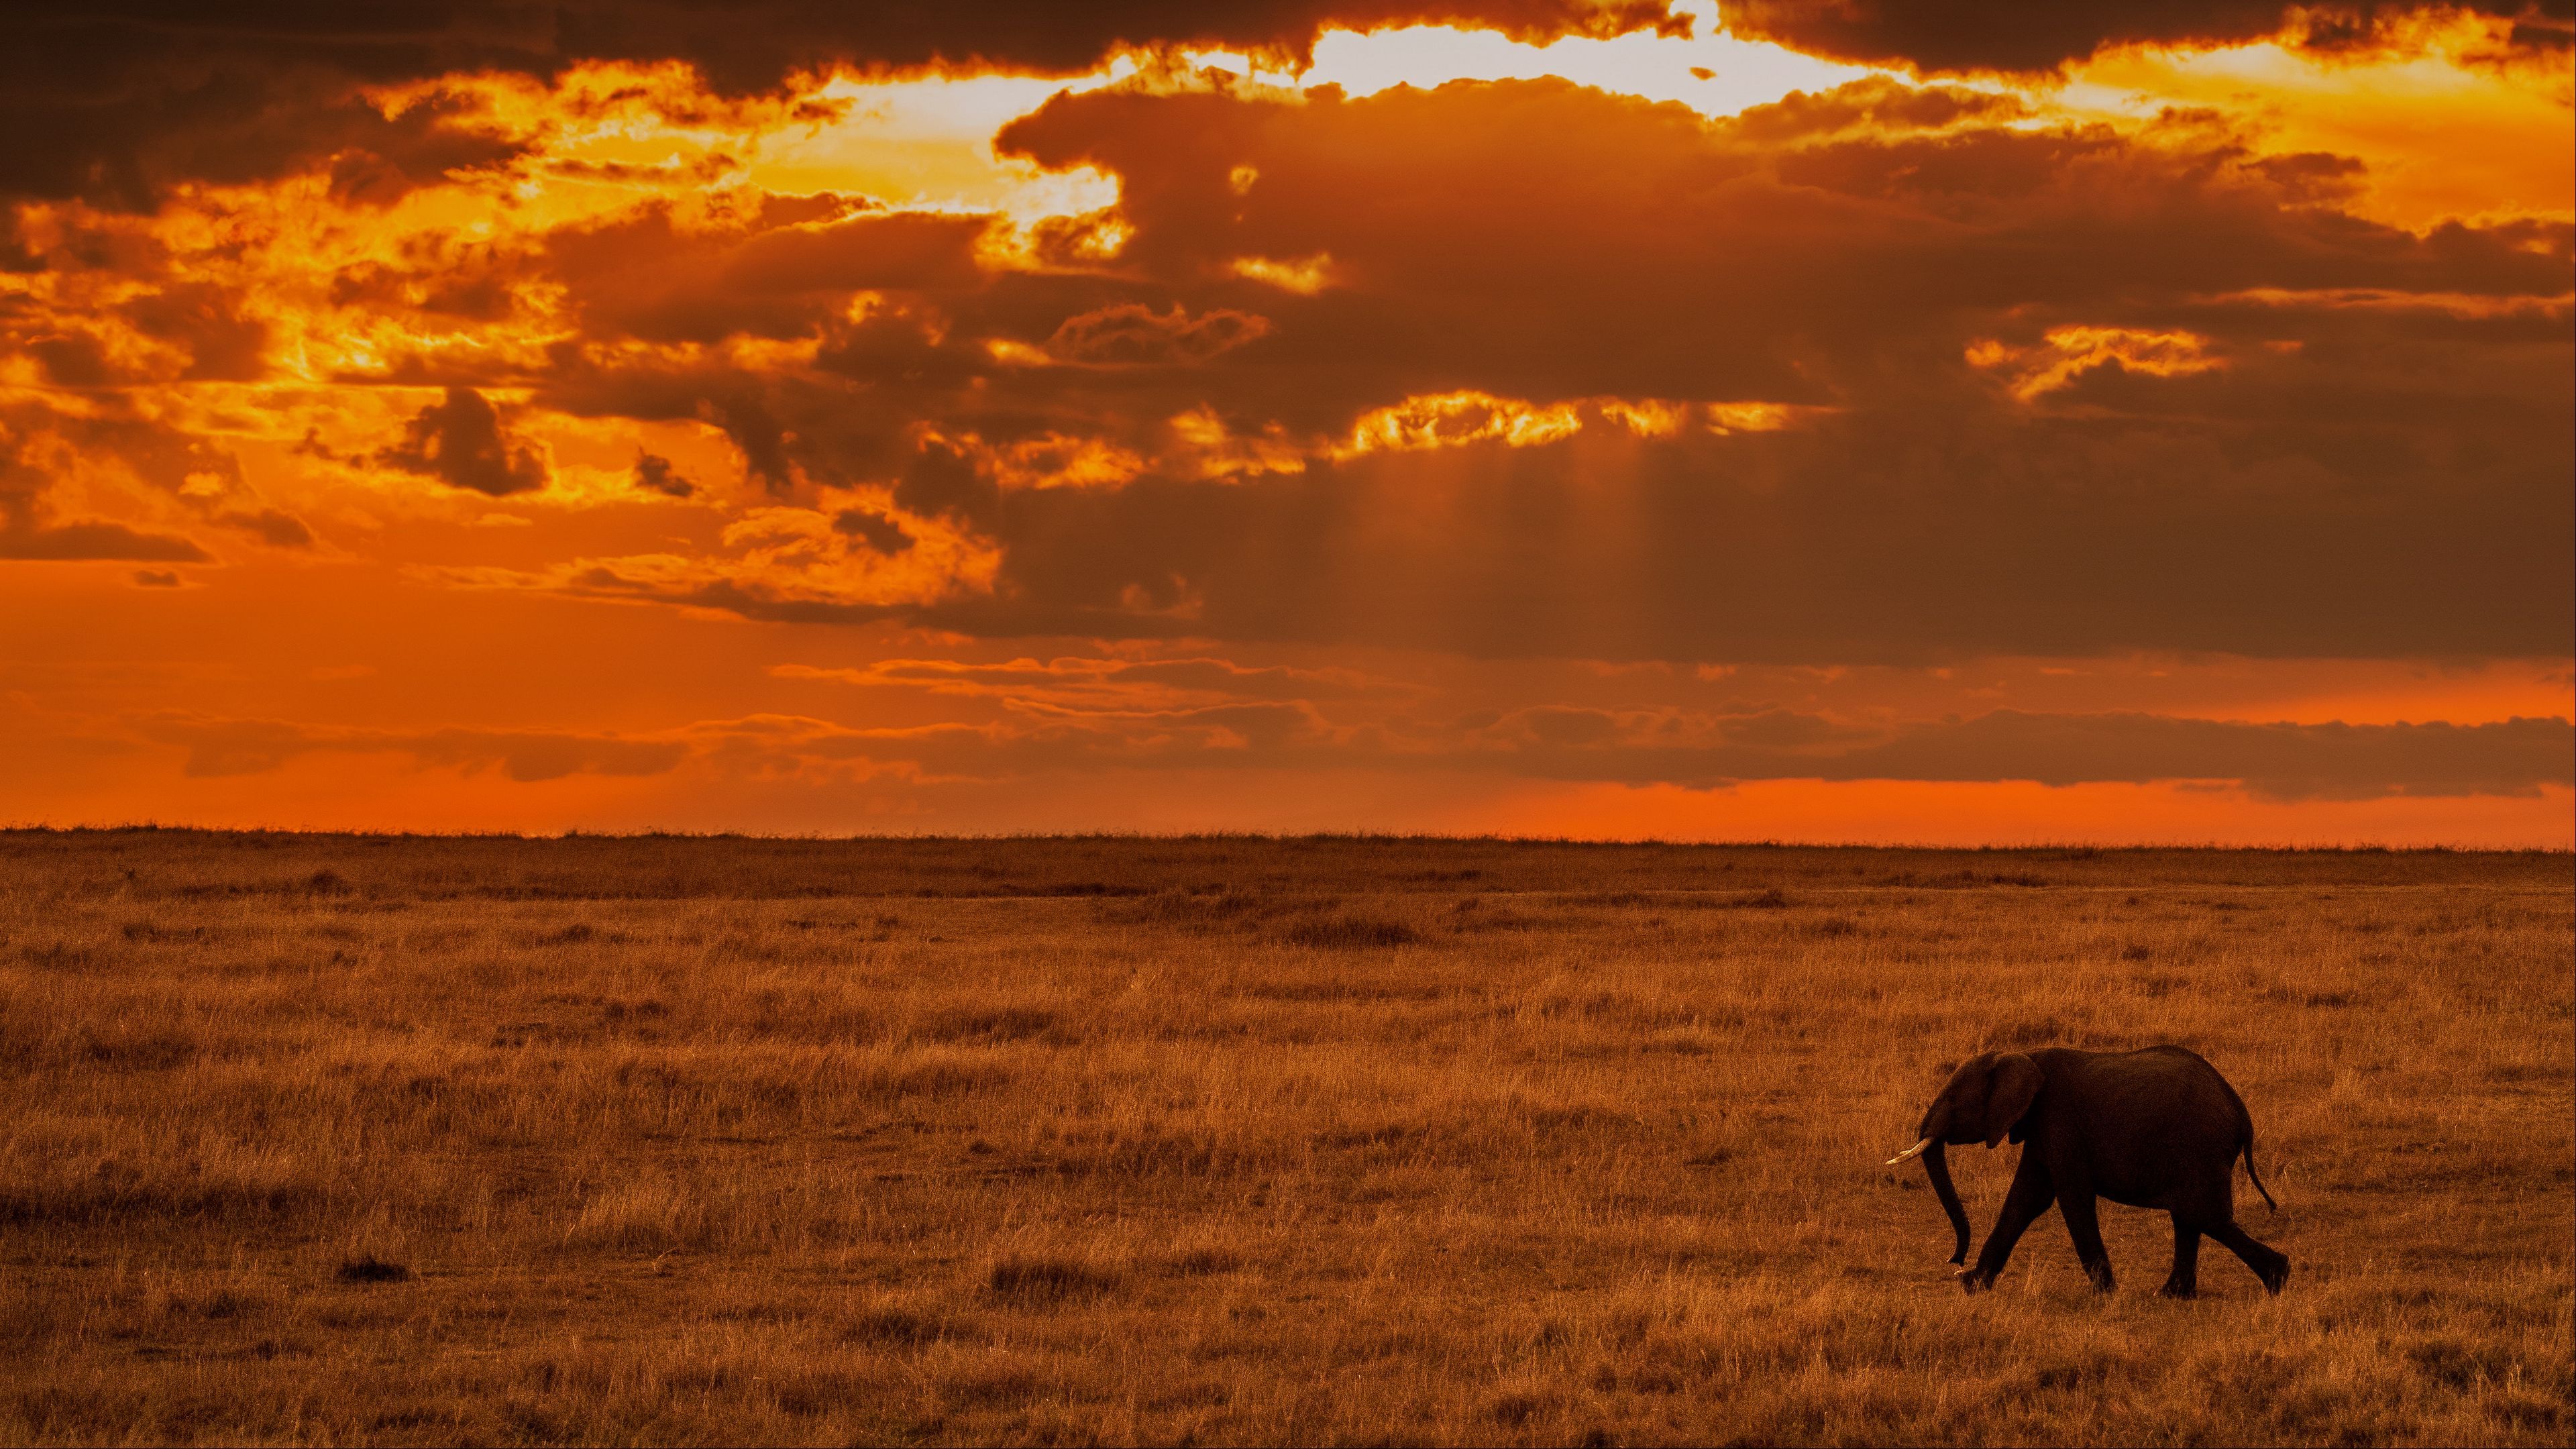 Download wallpaper 3840x2160 elephant, savanna, sunset, nature, africa 4k uhd 16:9 HD background